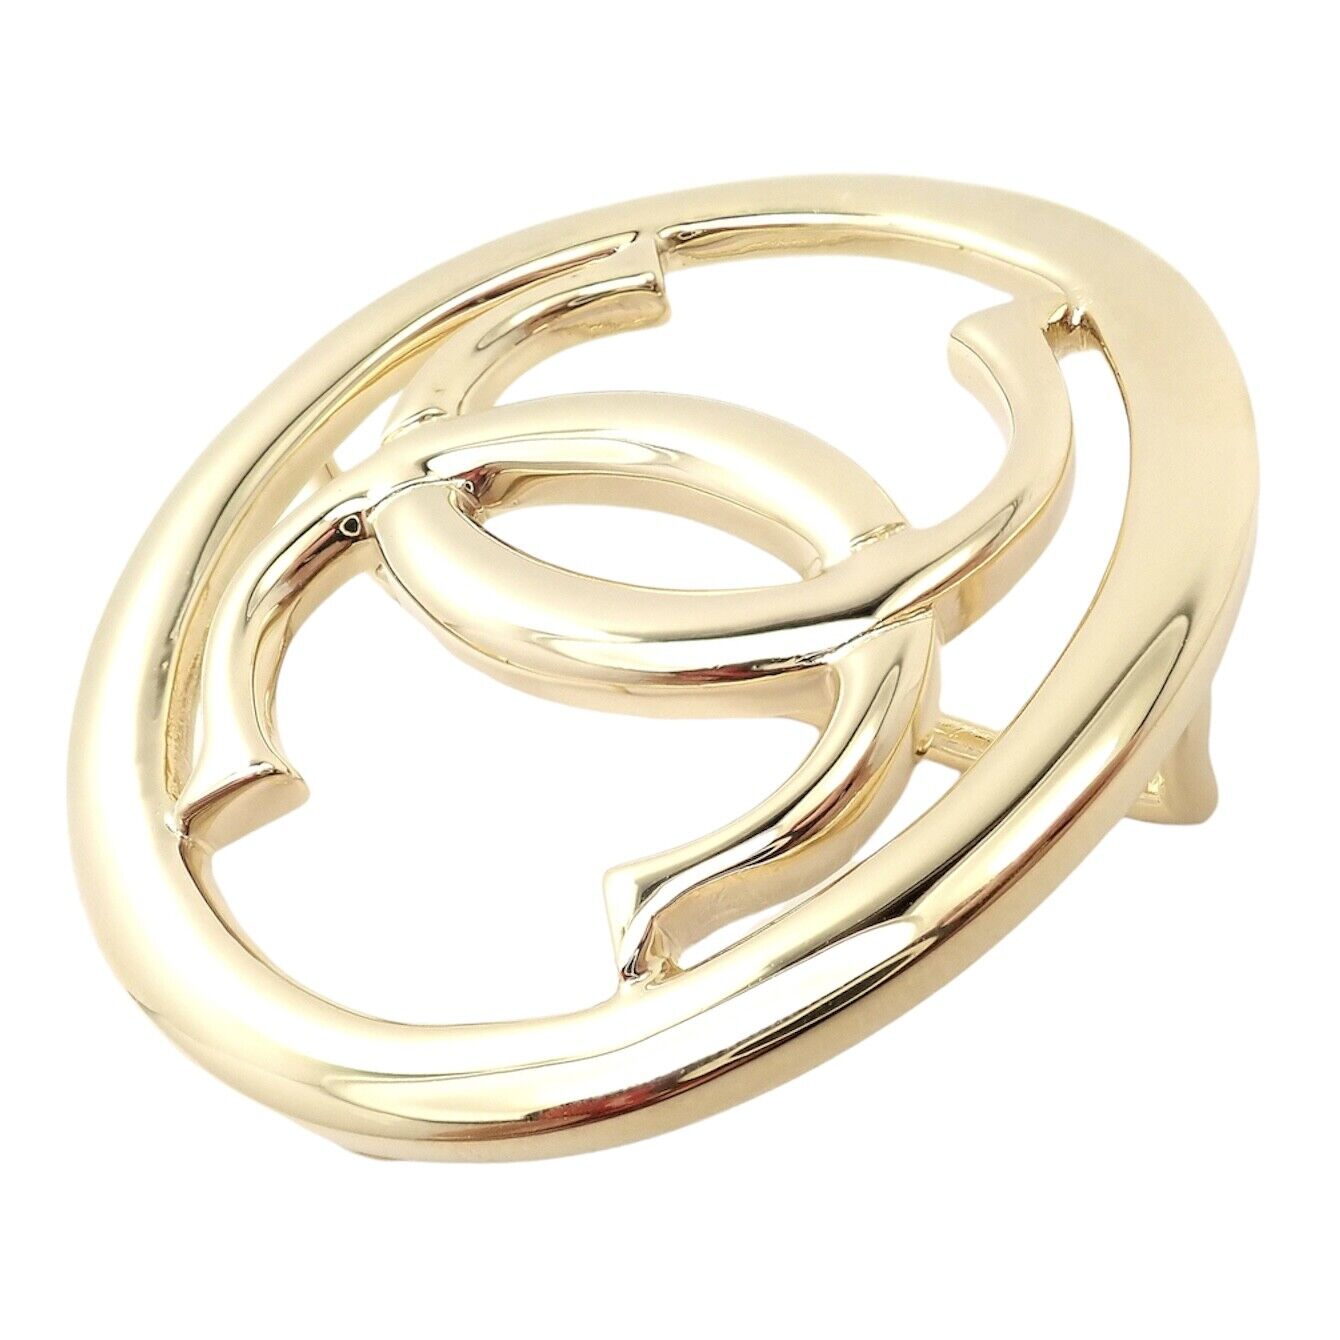 FWRD Renew Fendi Bangle Bracelet in Gold